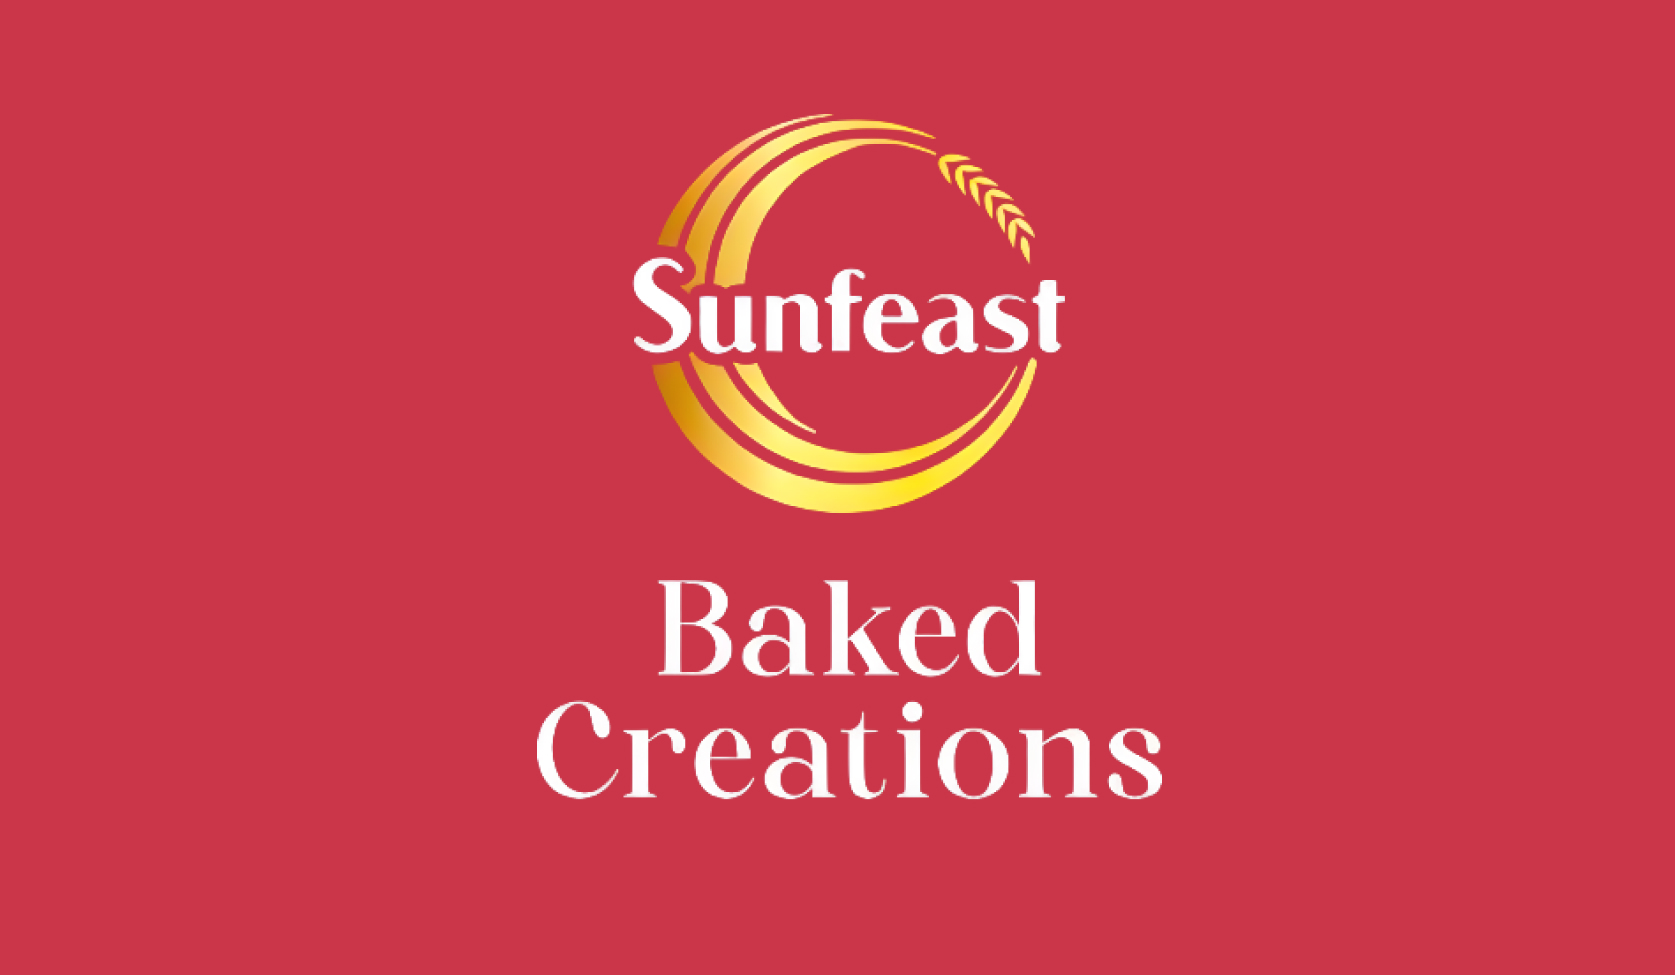 ITC Sunfeast Baked Creations